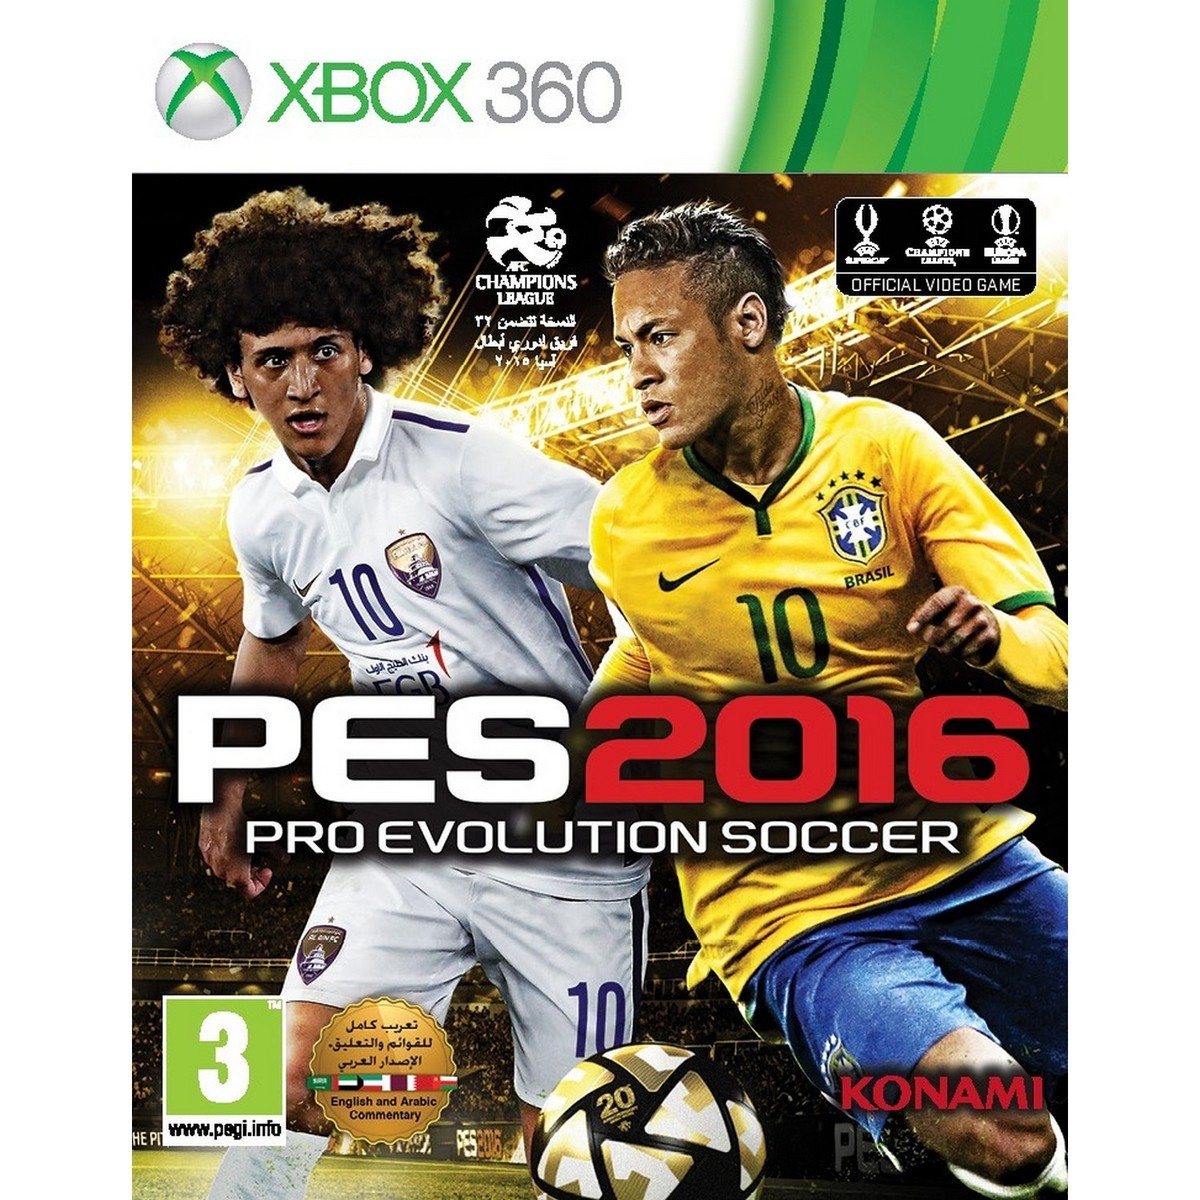 Xbox 360 Pro Evolution Soccer 2016